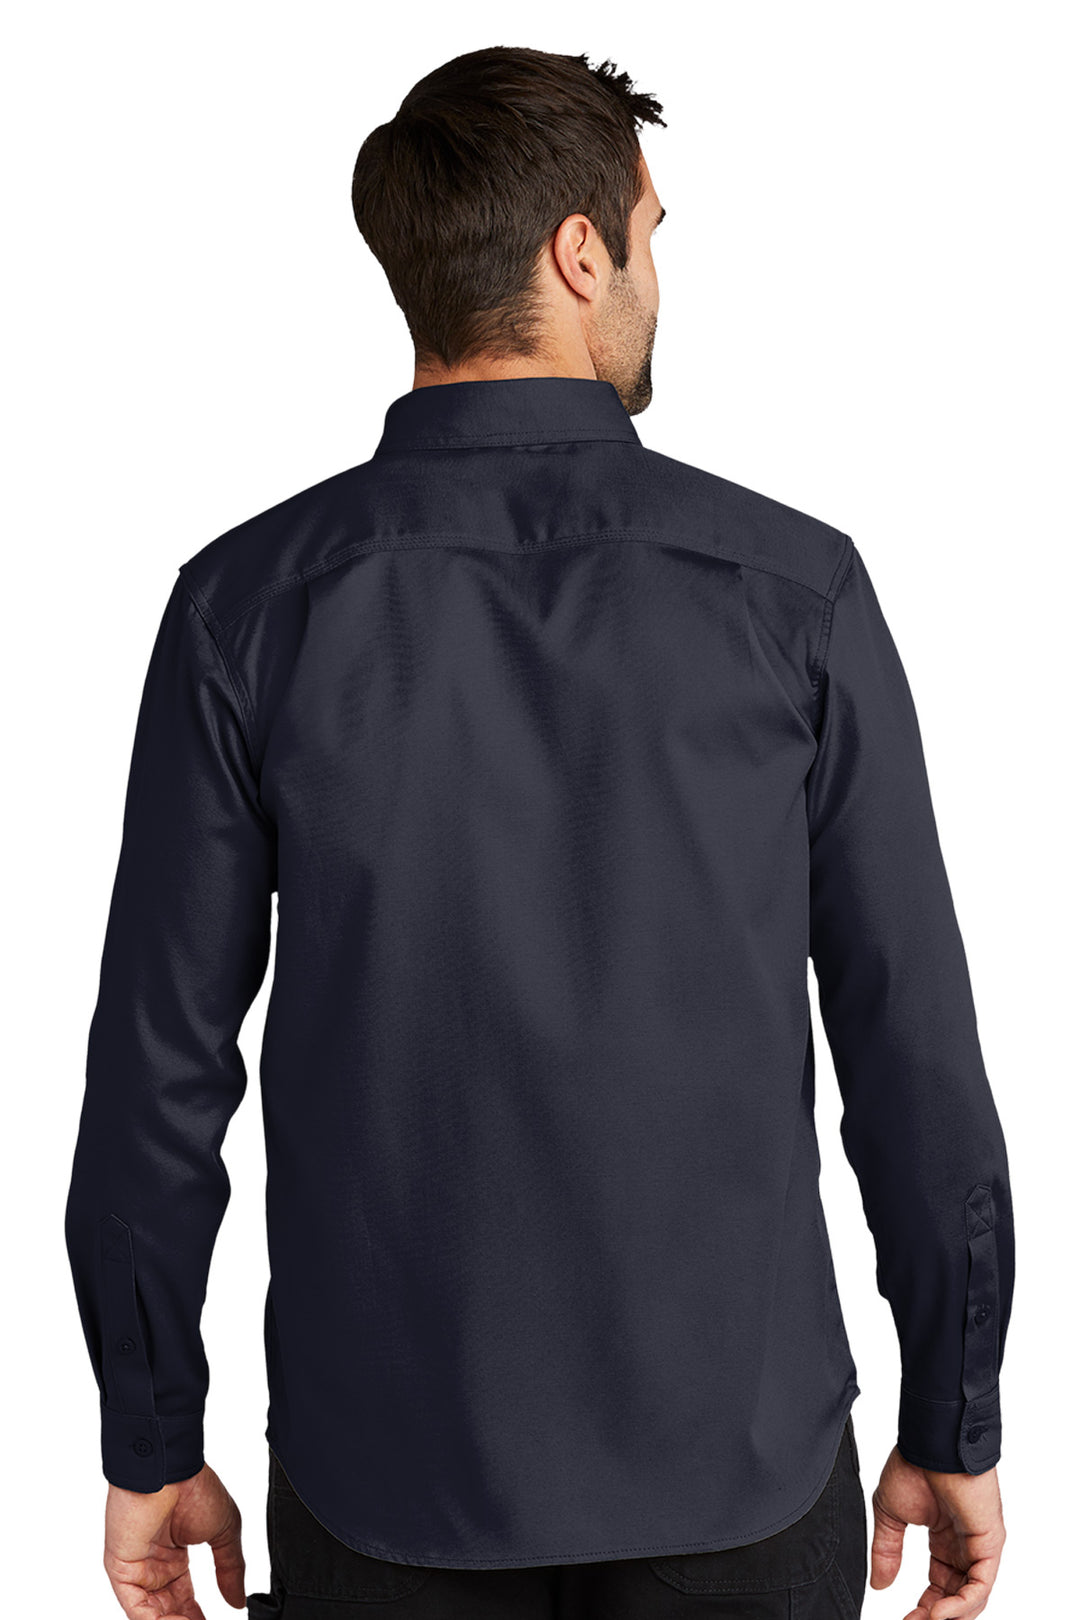 Rugged Professional Series Long Sleeve Shirt